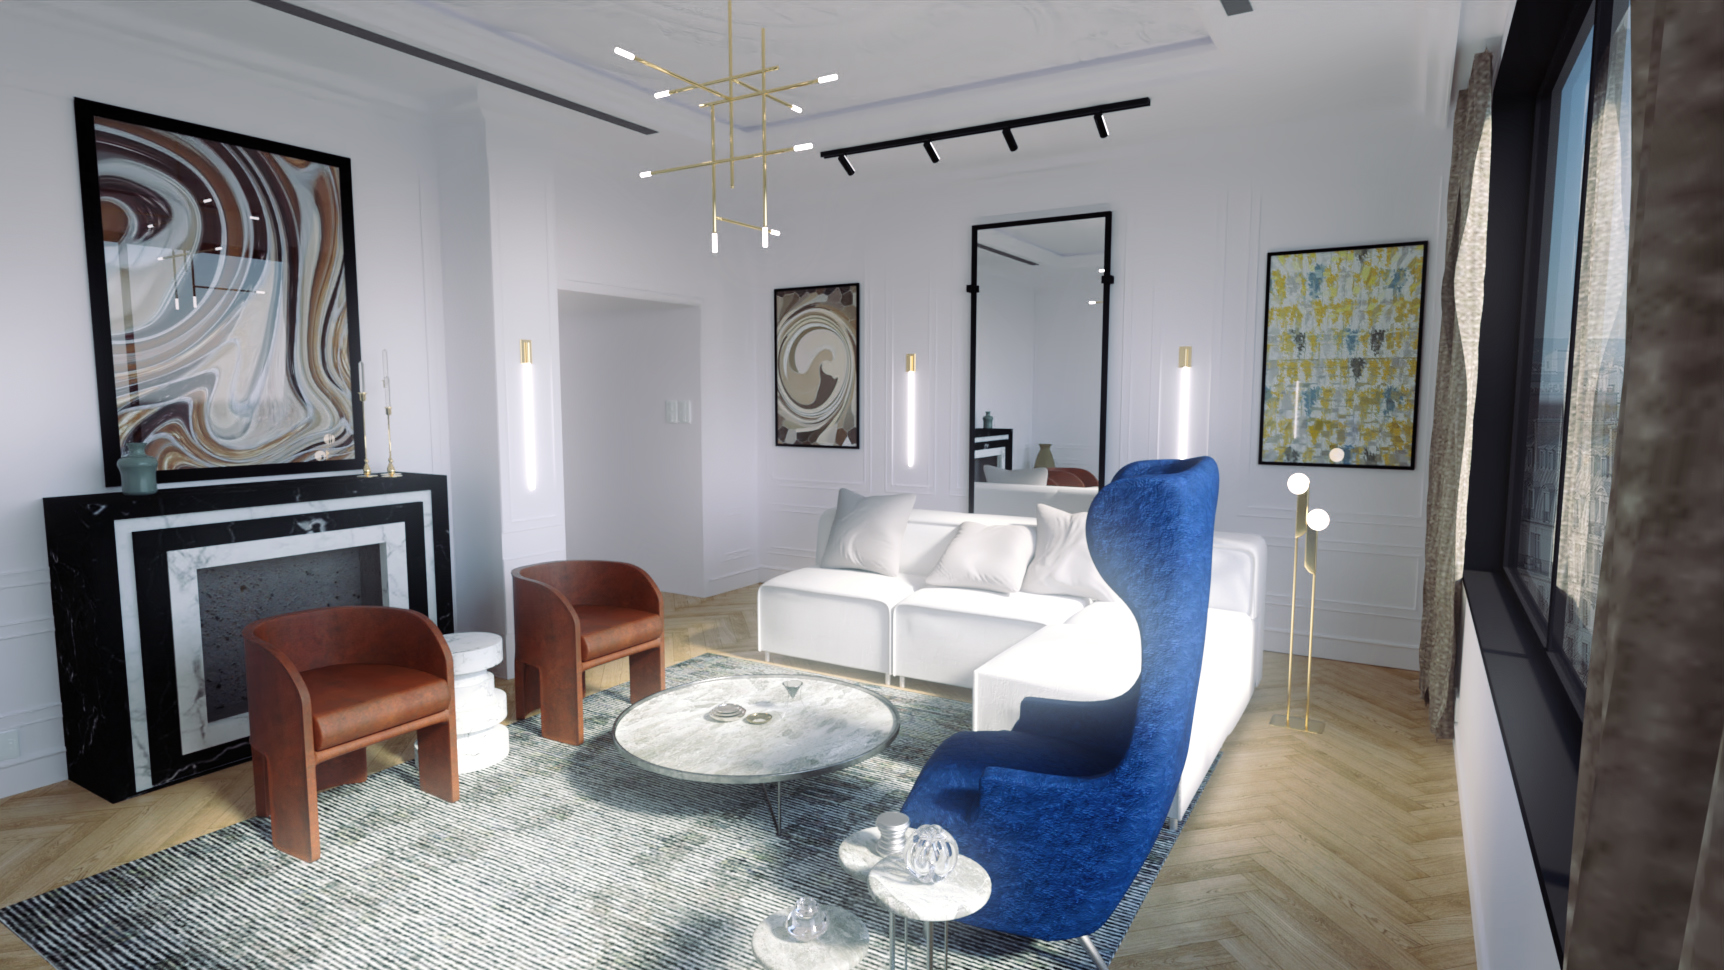 Paris Living Room by: Digitallab3D, 3D Models by Daz 3D